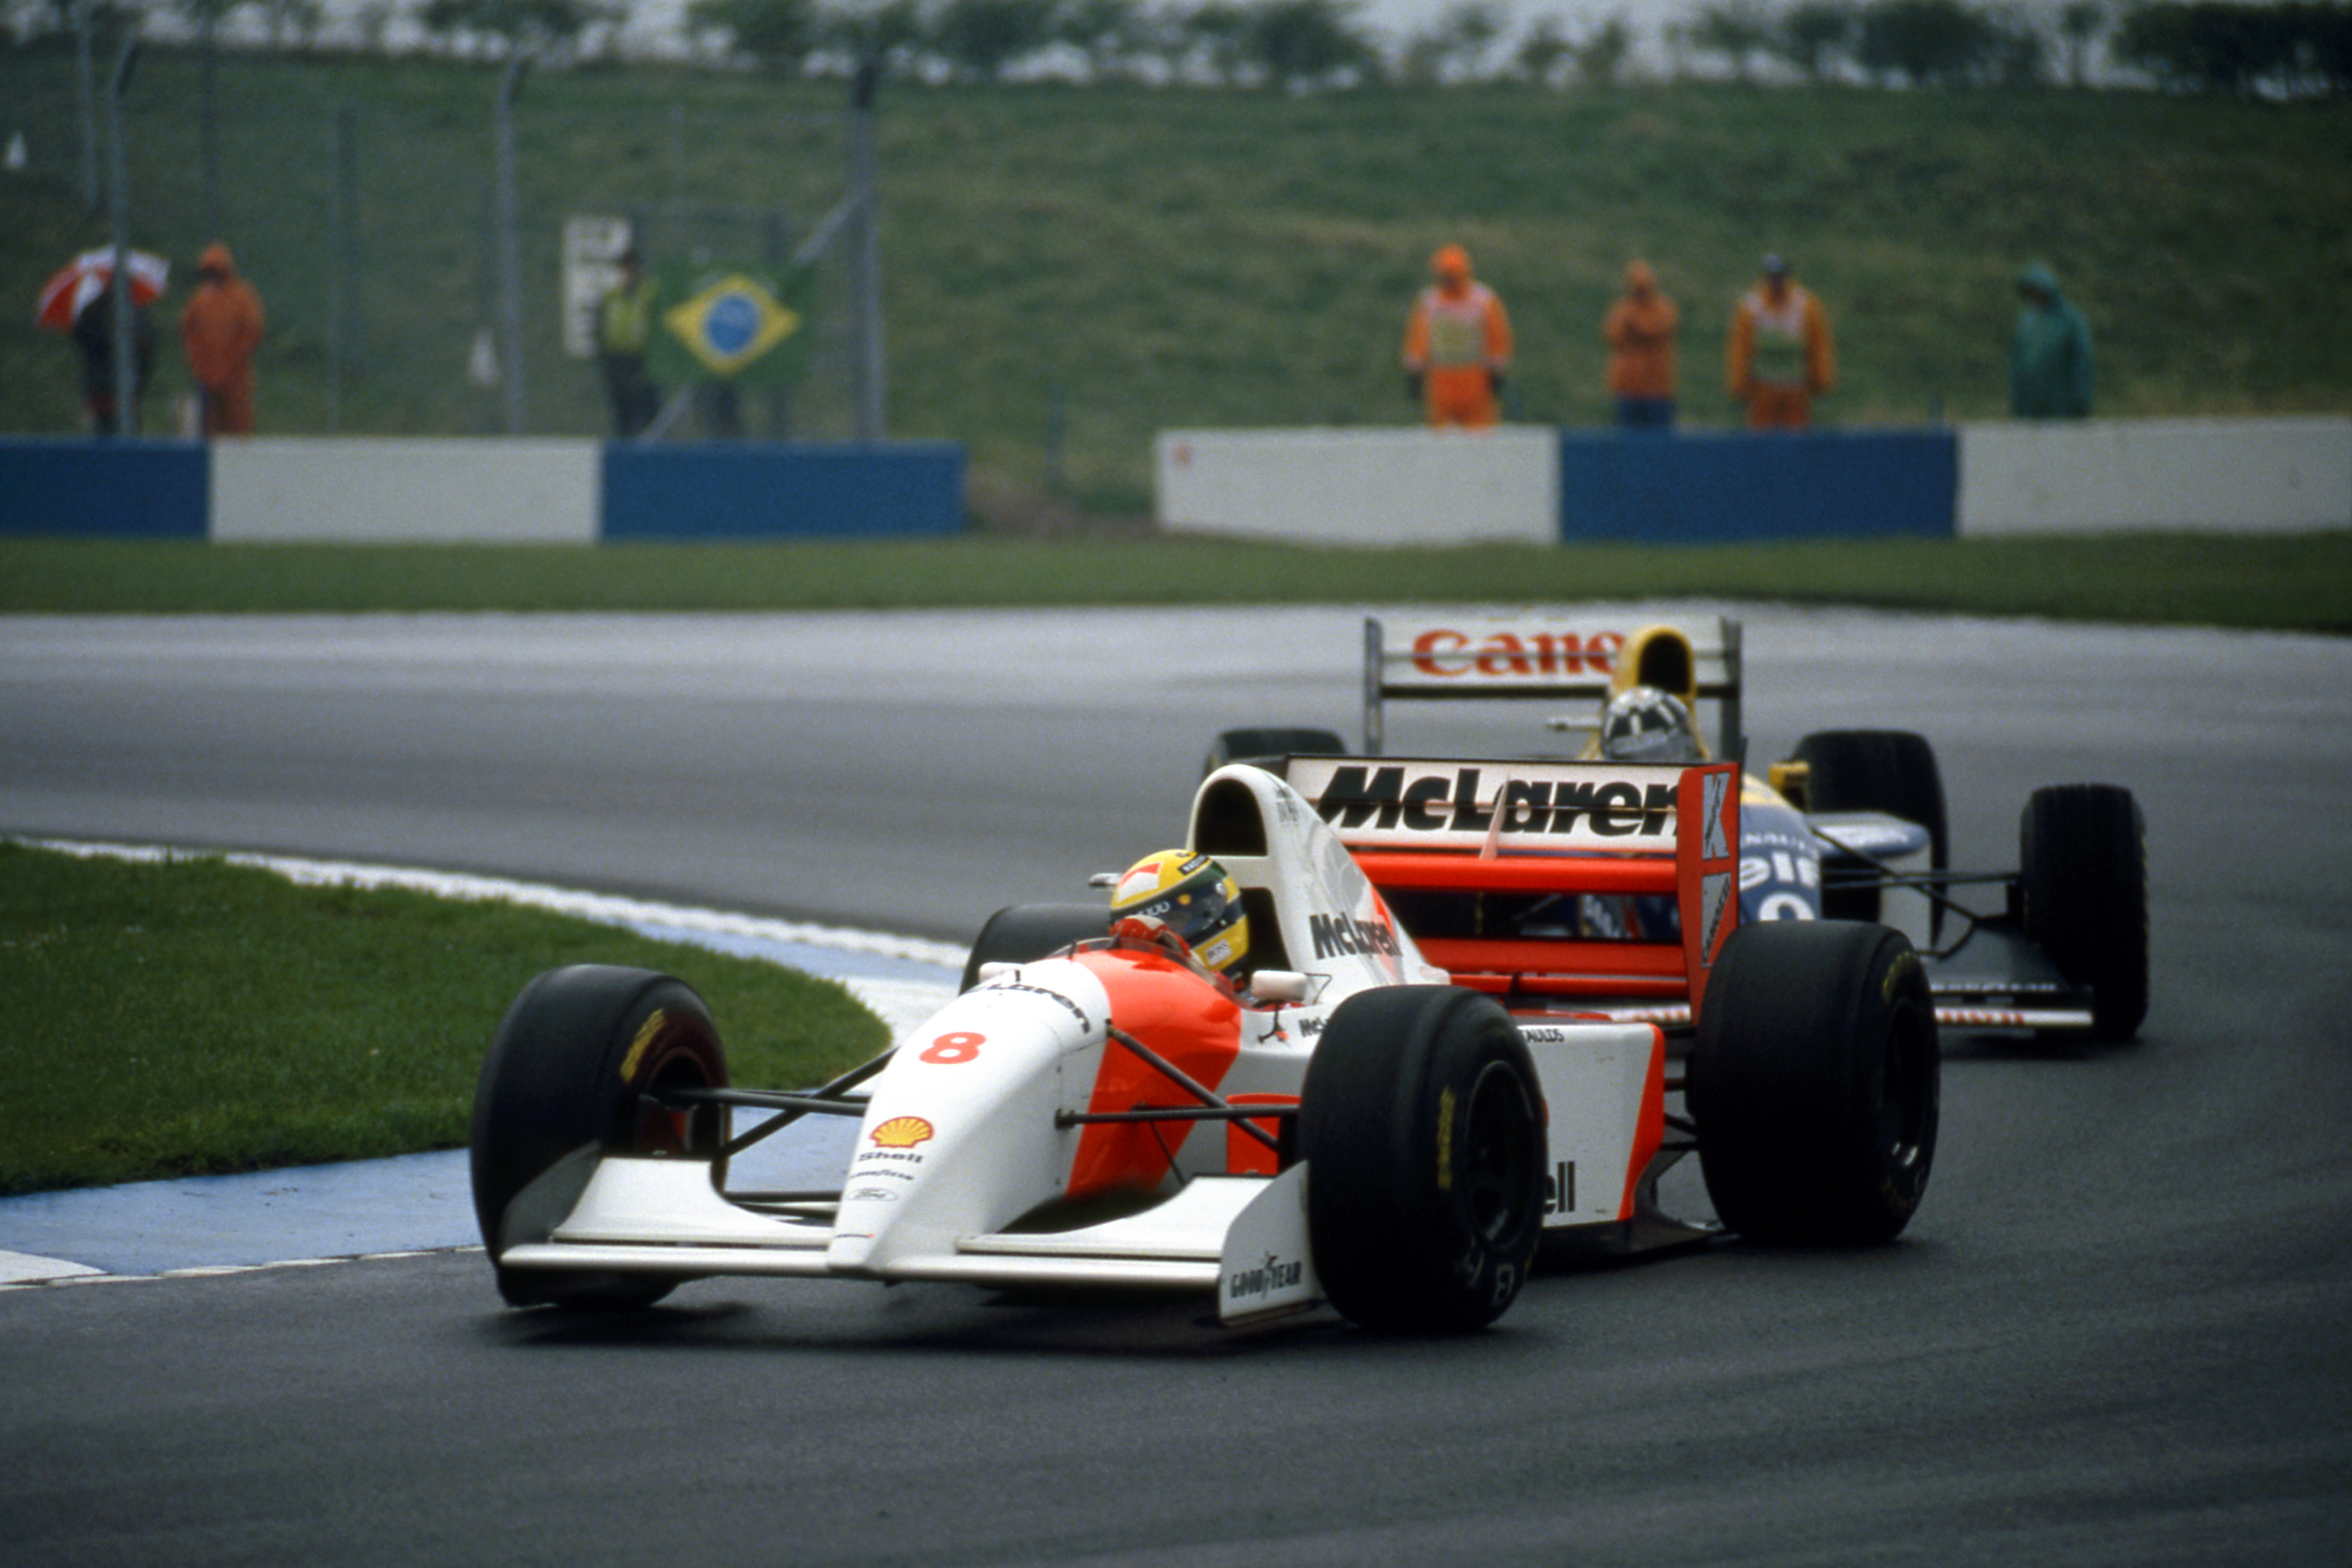 European Grand Prix Donington Park (gbr) 09 11 04 1993